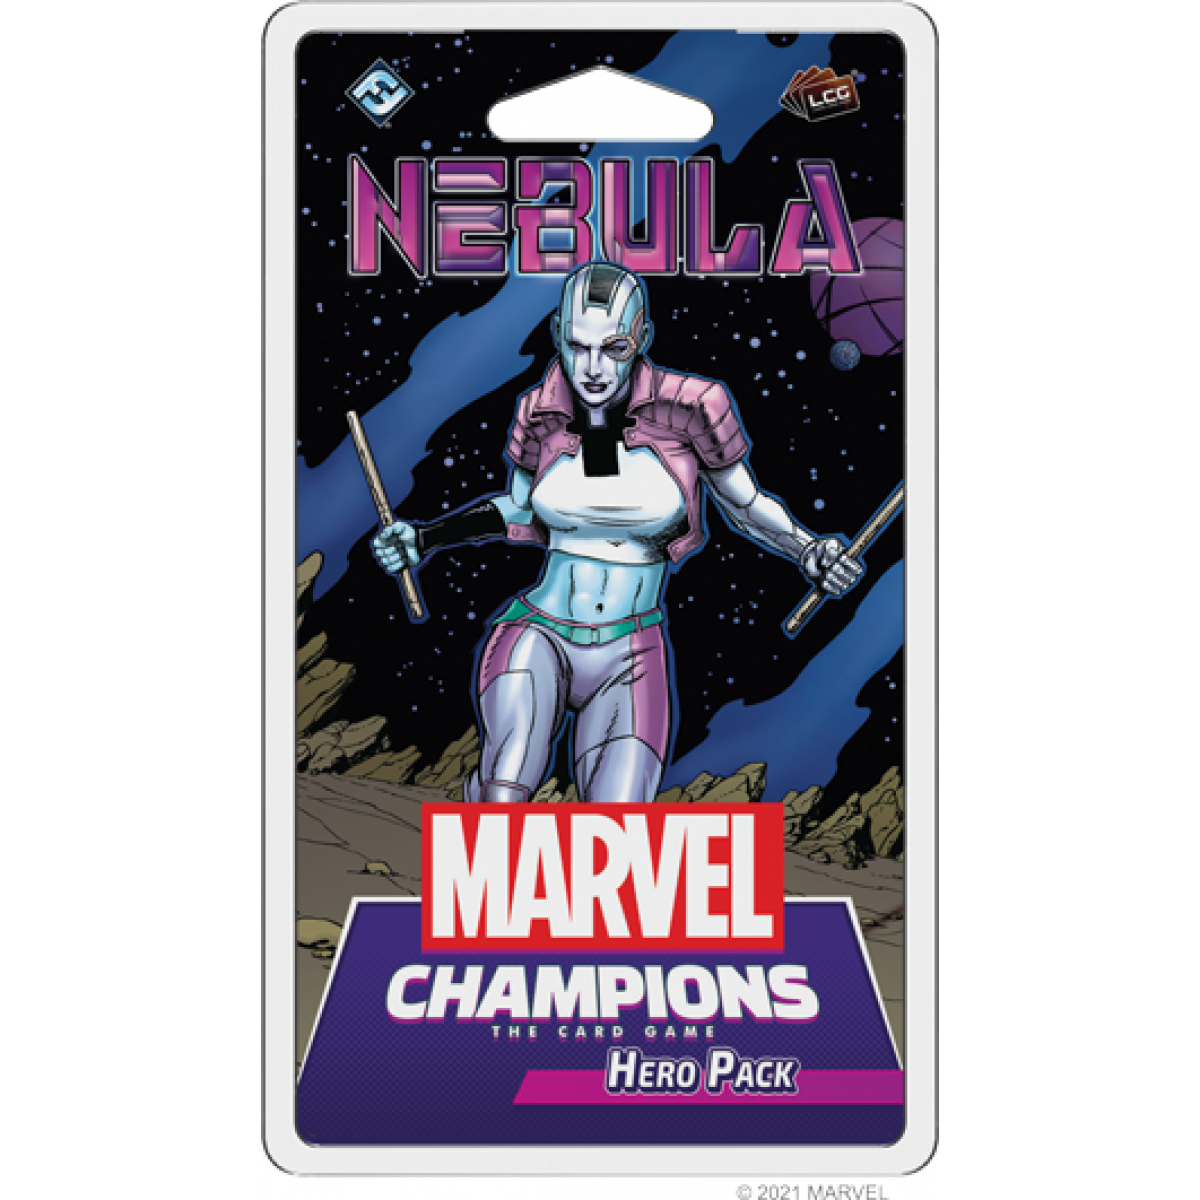 Marvel Champions The Card Game Nebula Hero Pack